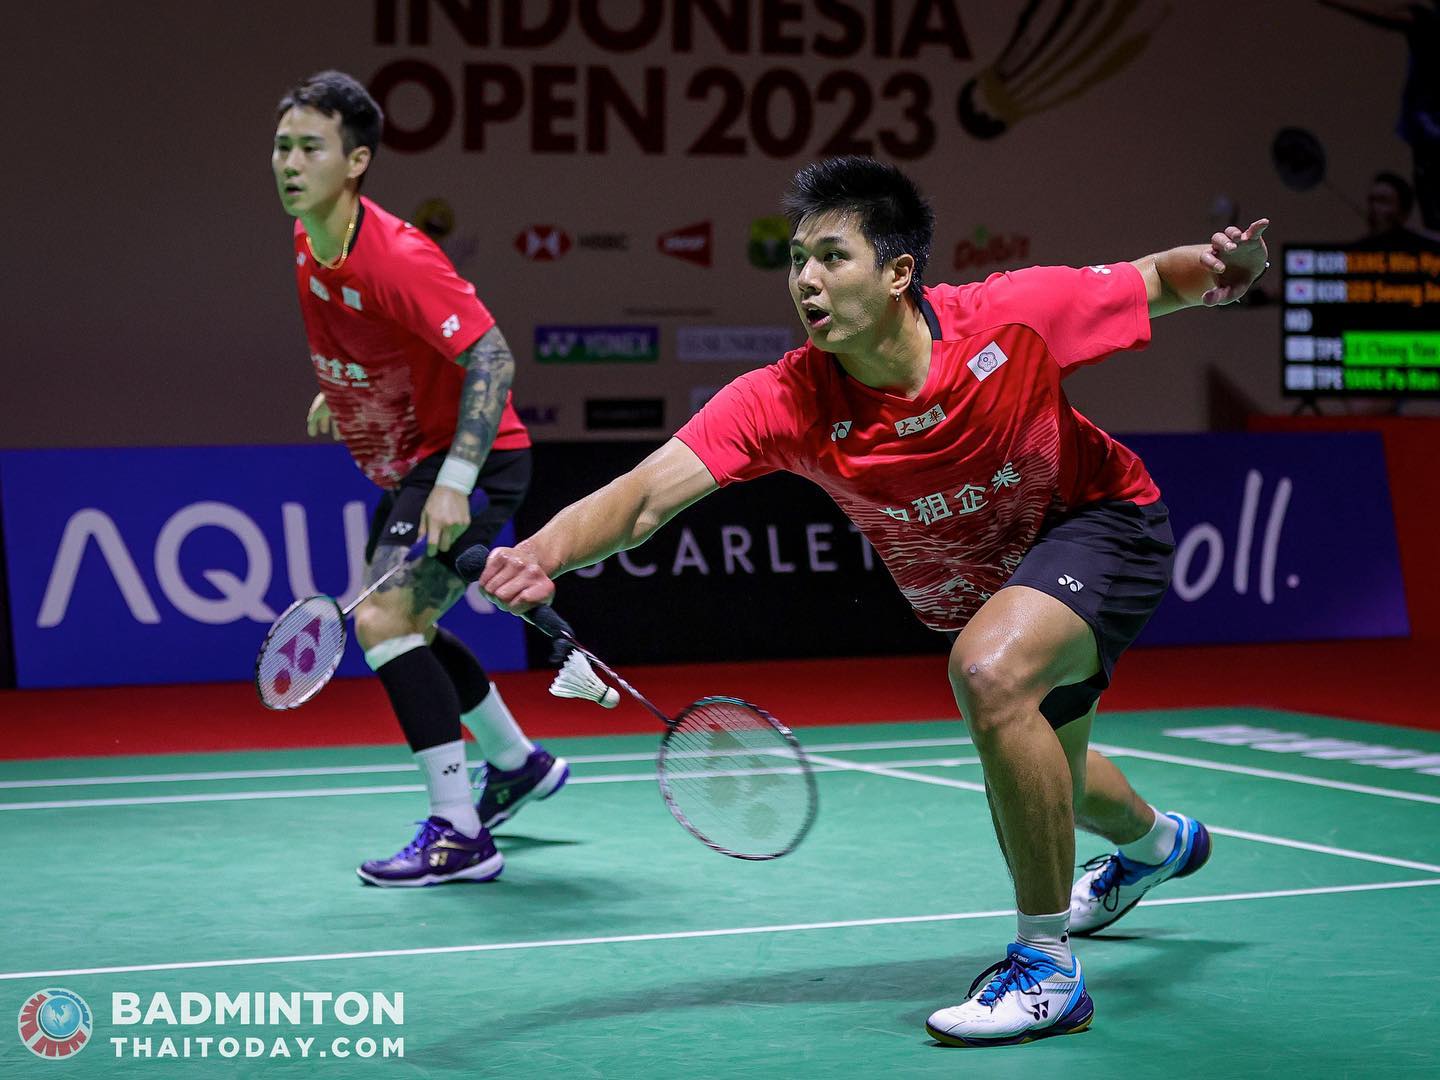 Indonesia Open 2023 รูปภาพกีฬาแบดมินตัน